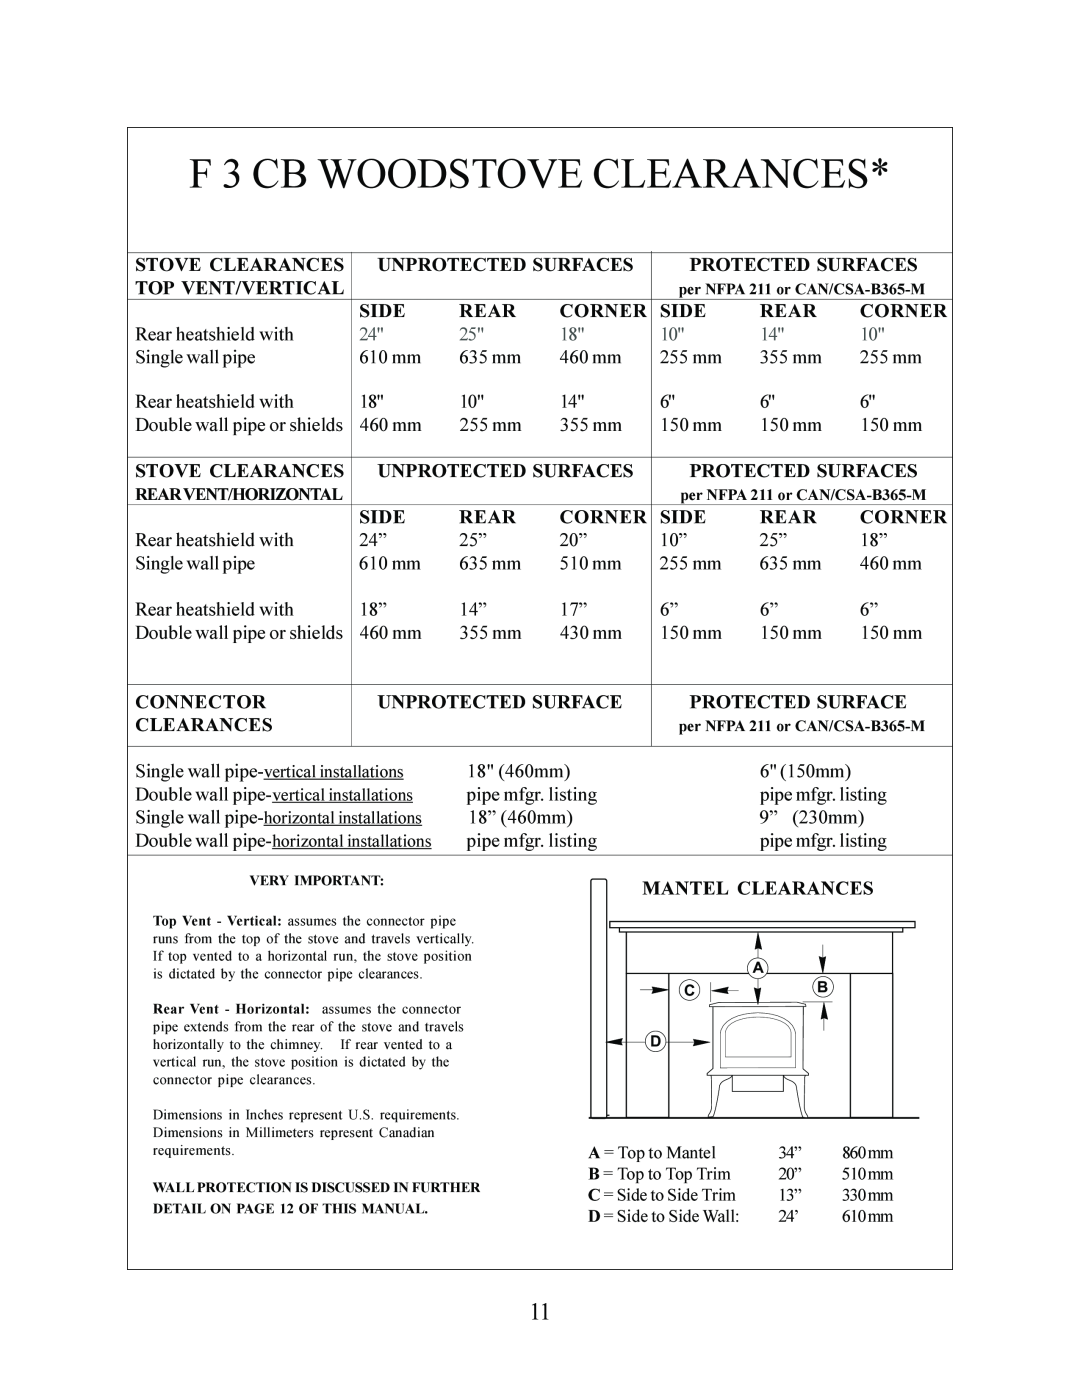 Jotul F 3 CB WOODSTOVE CLEARANCES, Stove Clearances, Unprotected Surfaces, Protected Surfaces, Top Vent/Vertical, Side 